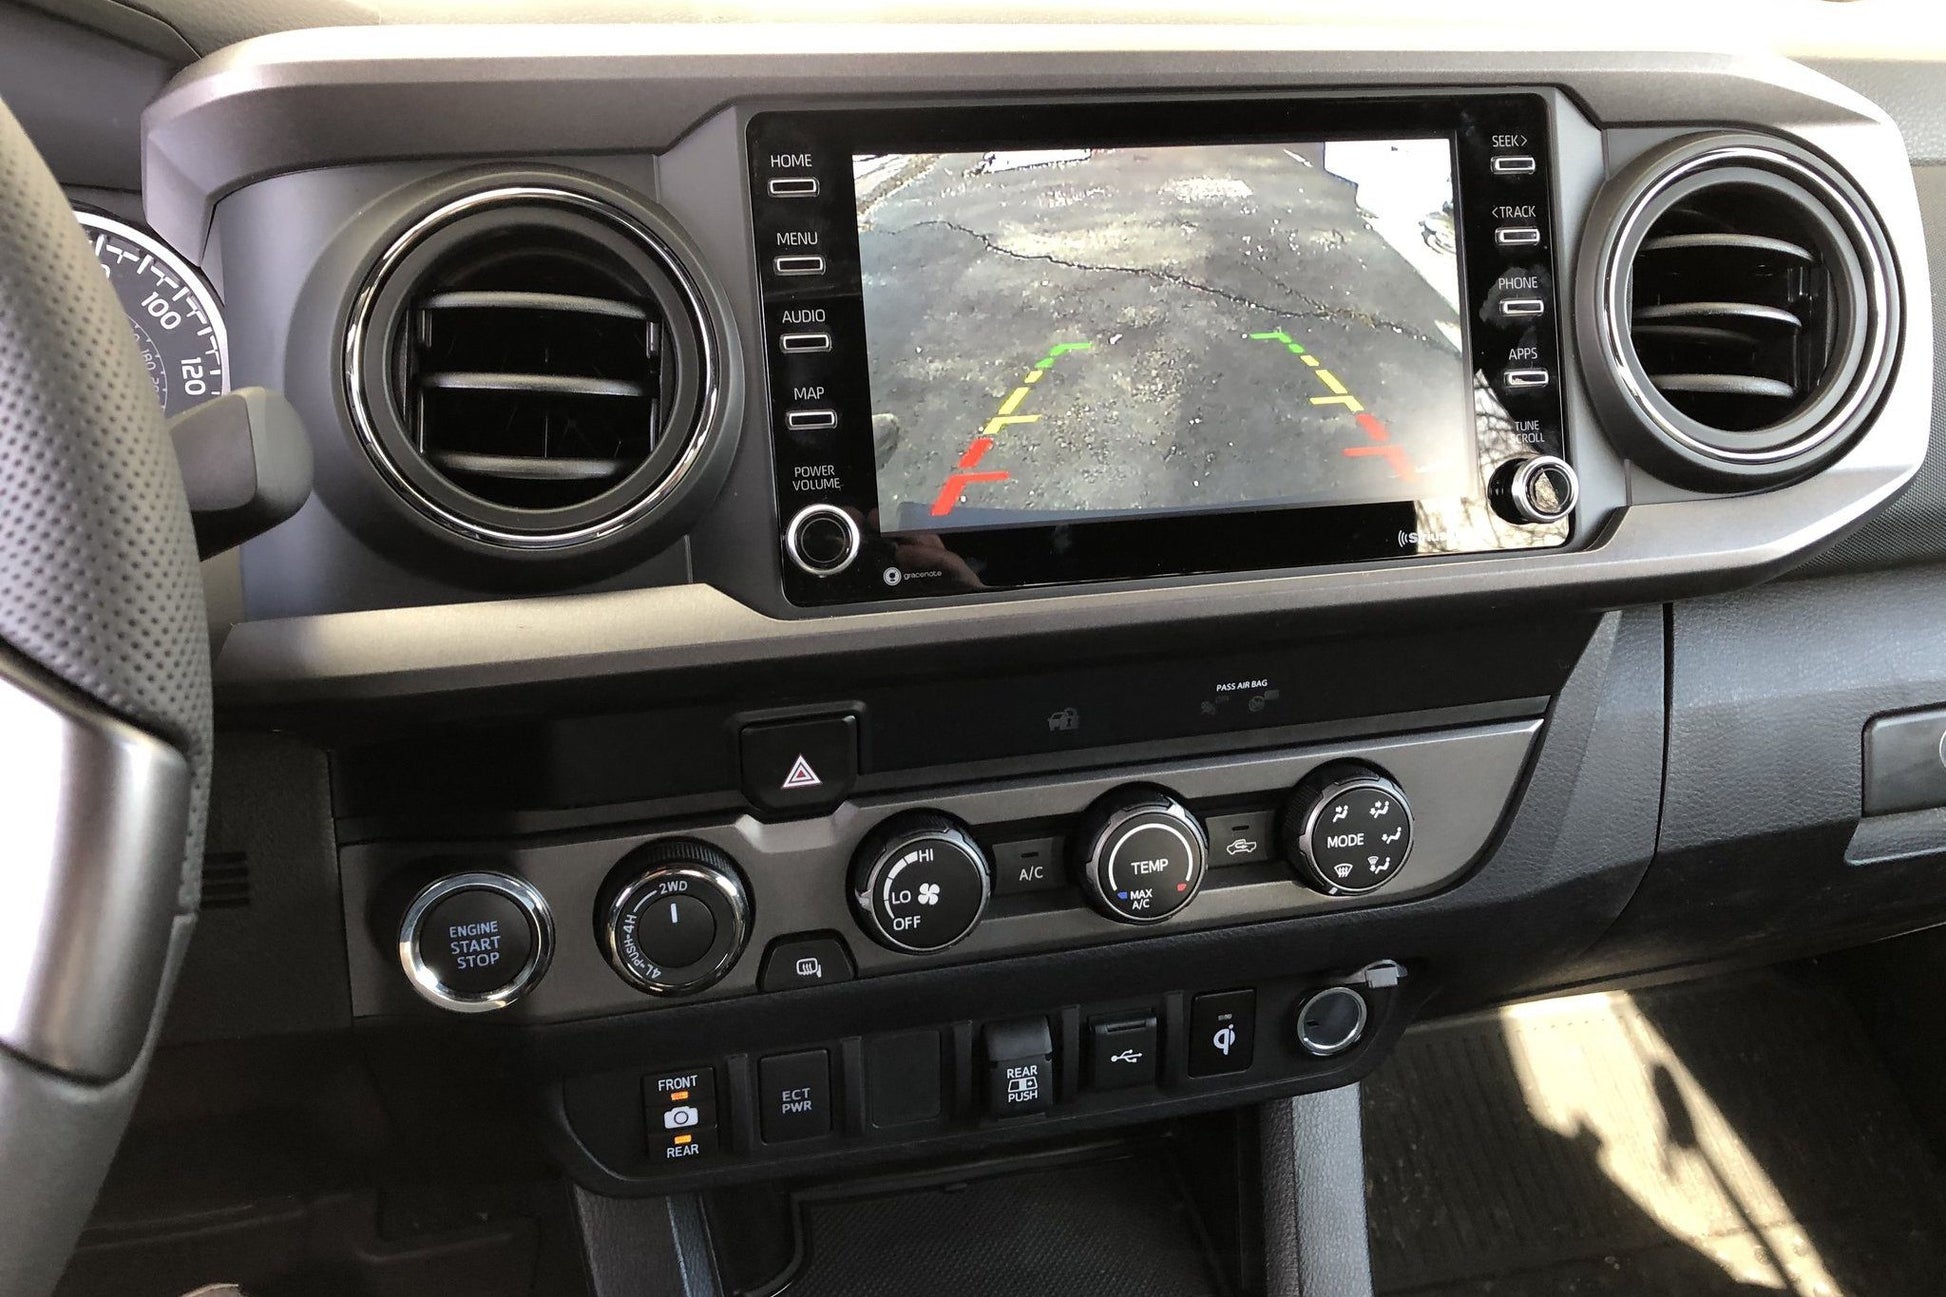 Toyota Tacoma Alpine Front/Rear Camera & Dash Cam Walk-Around